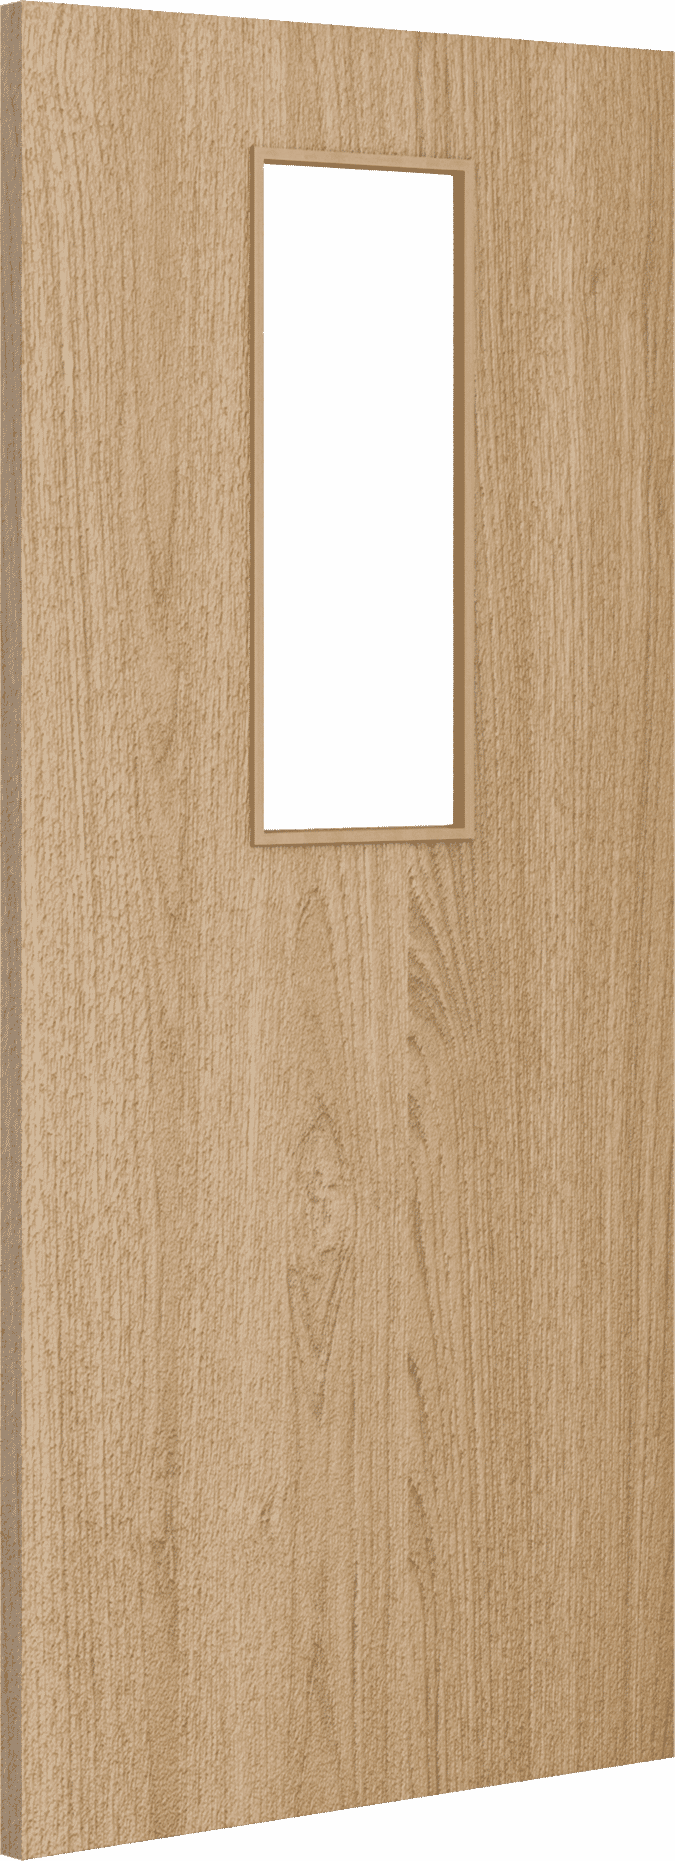 2040mm x 726mm x 44mm Architectural Oak 14 Frosted Glazed - Prefinished FD30 Fire Door Blank